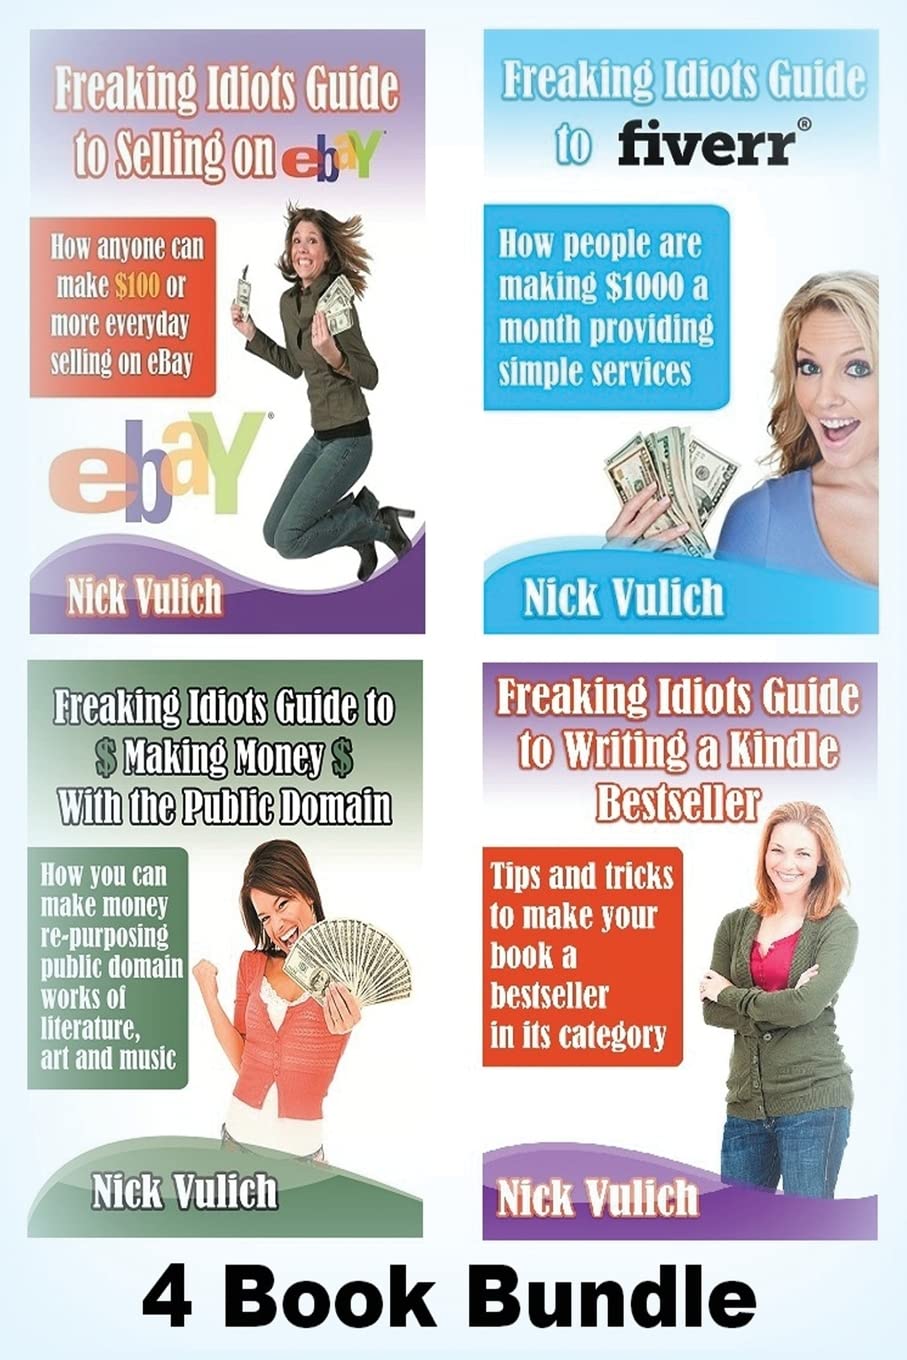 Freaking Idiots Guides 4 Book Bundle Ebay Fiverr Kindle  Public Domain     Paperback – March 18, 2013